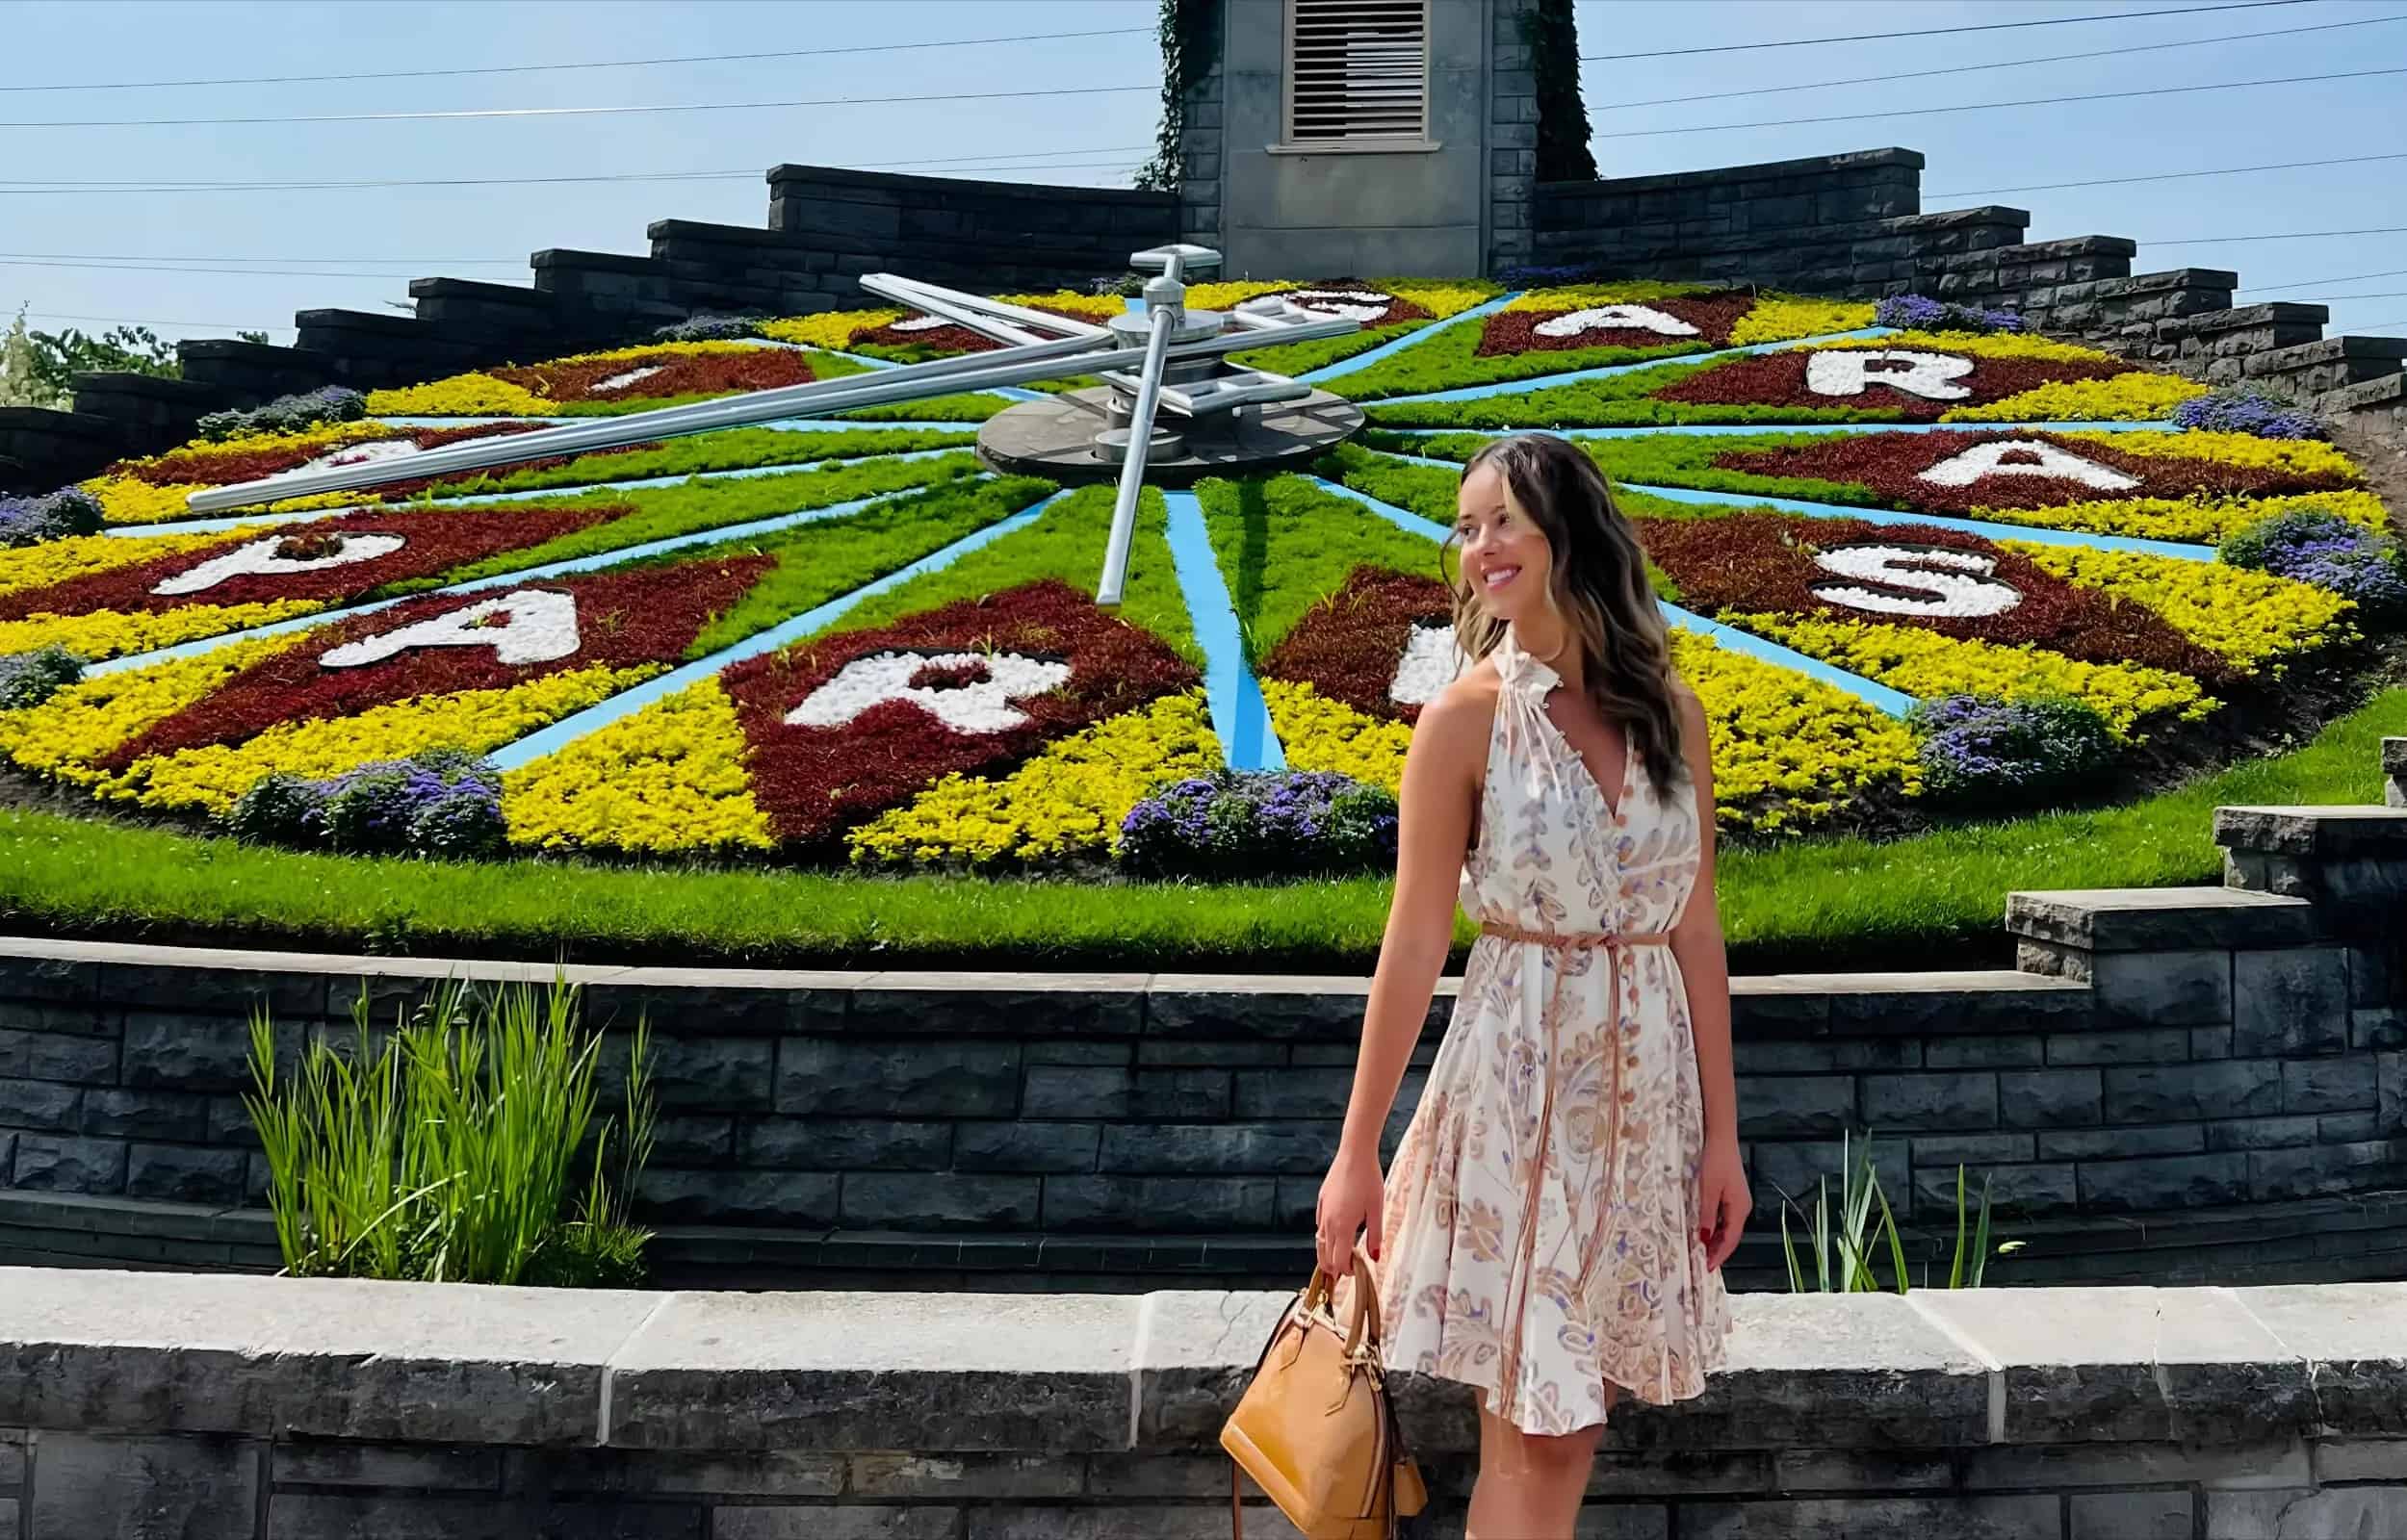 Niagara Falls Floral Clock - Stop for photos during your tour from Toronto